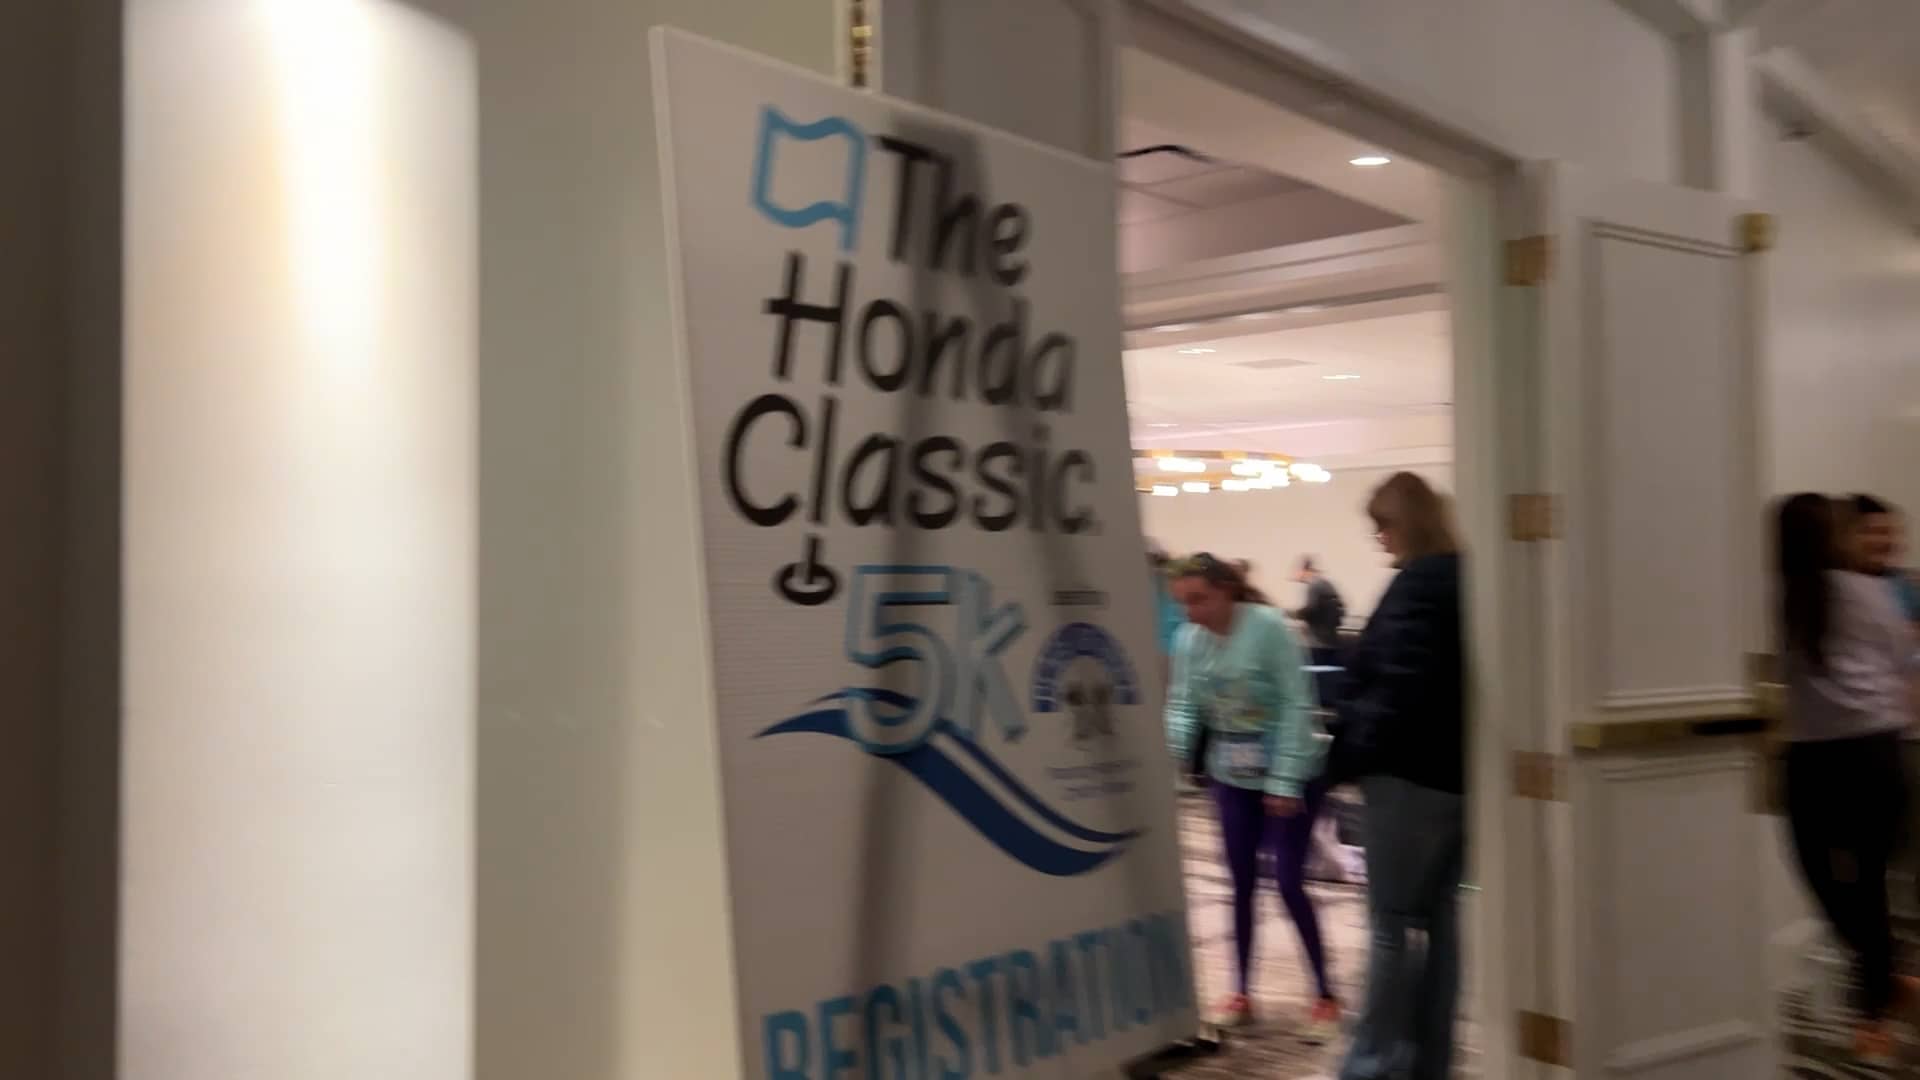 2023 Honda Classic 5k on Vimeo